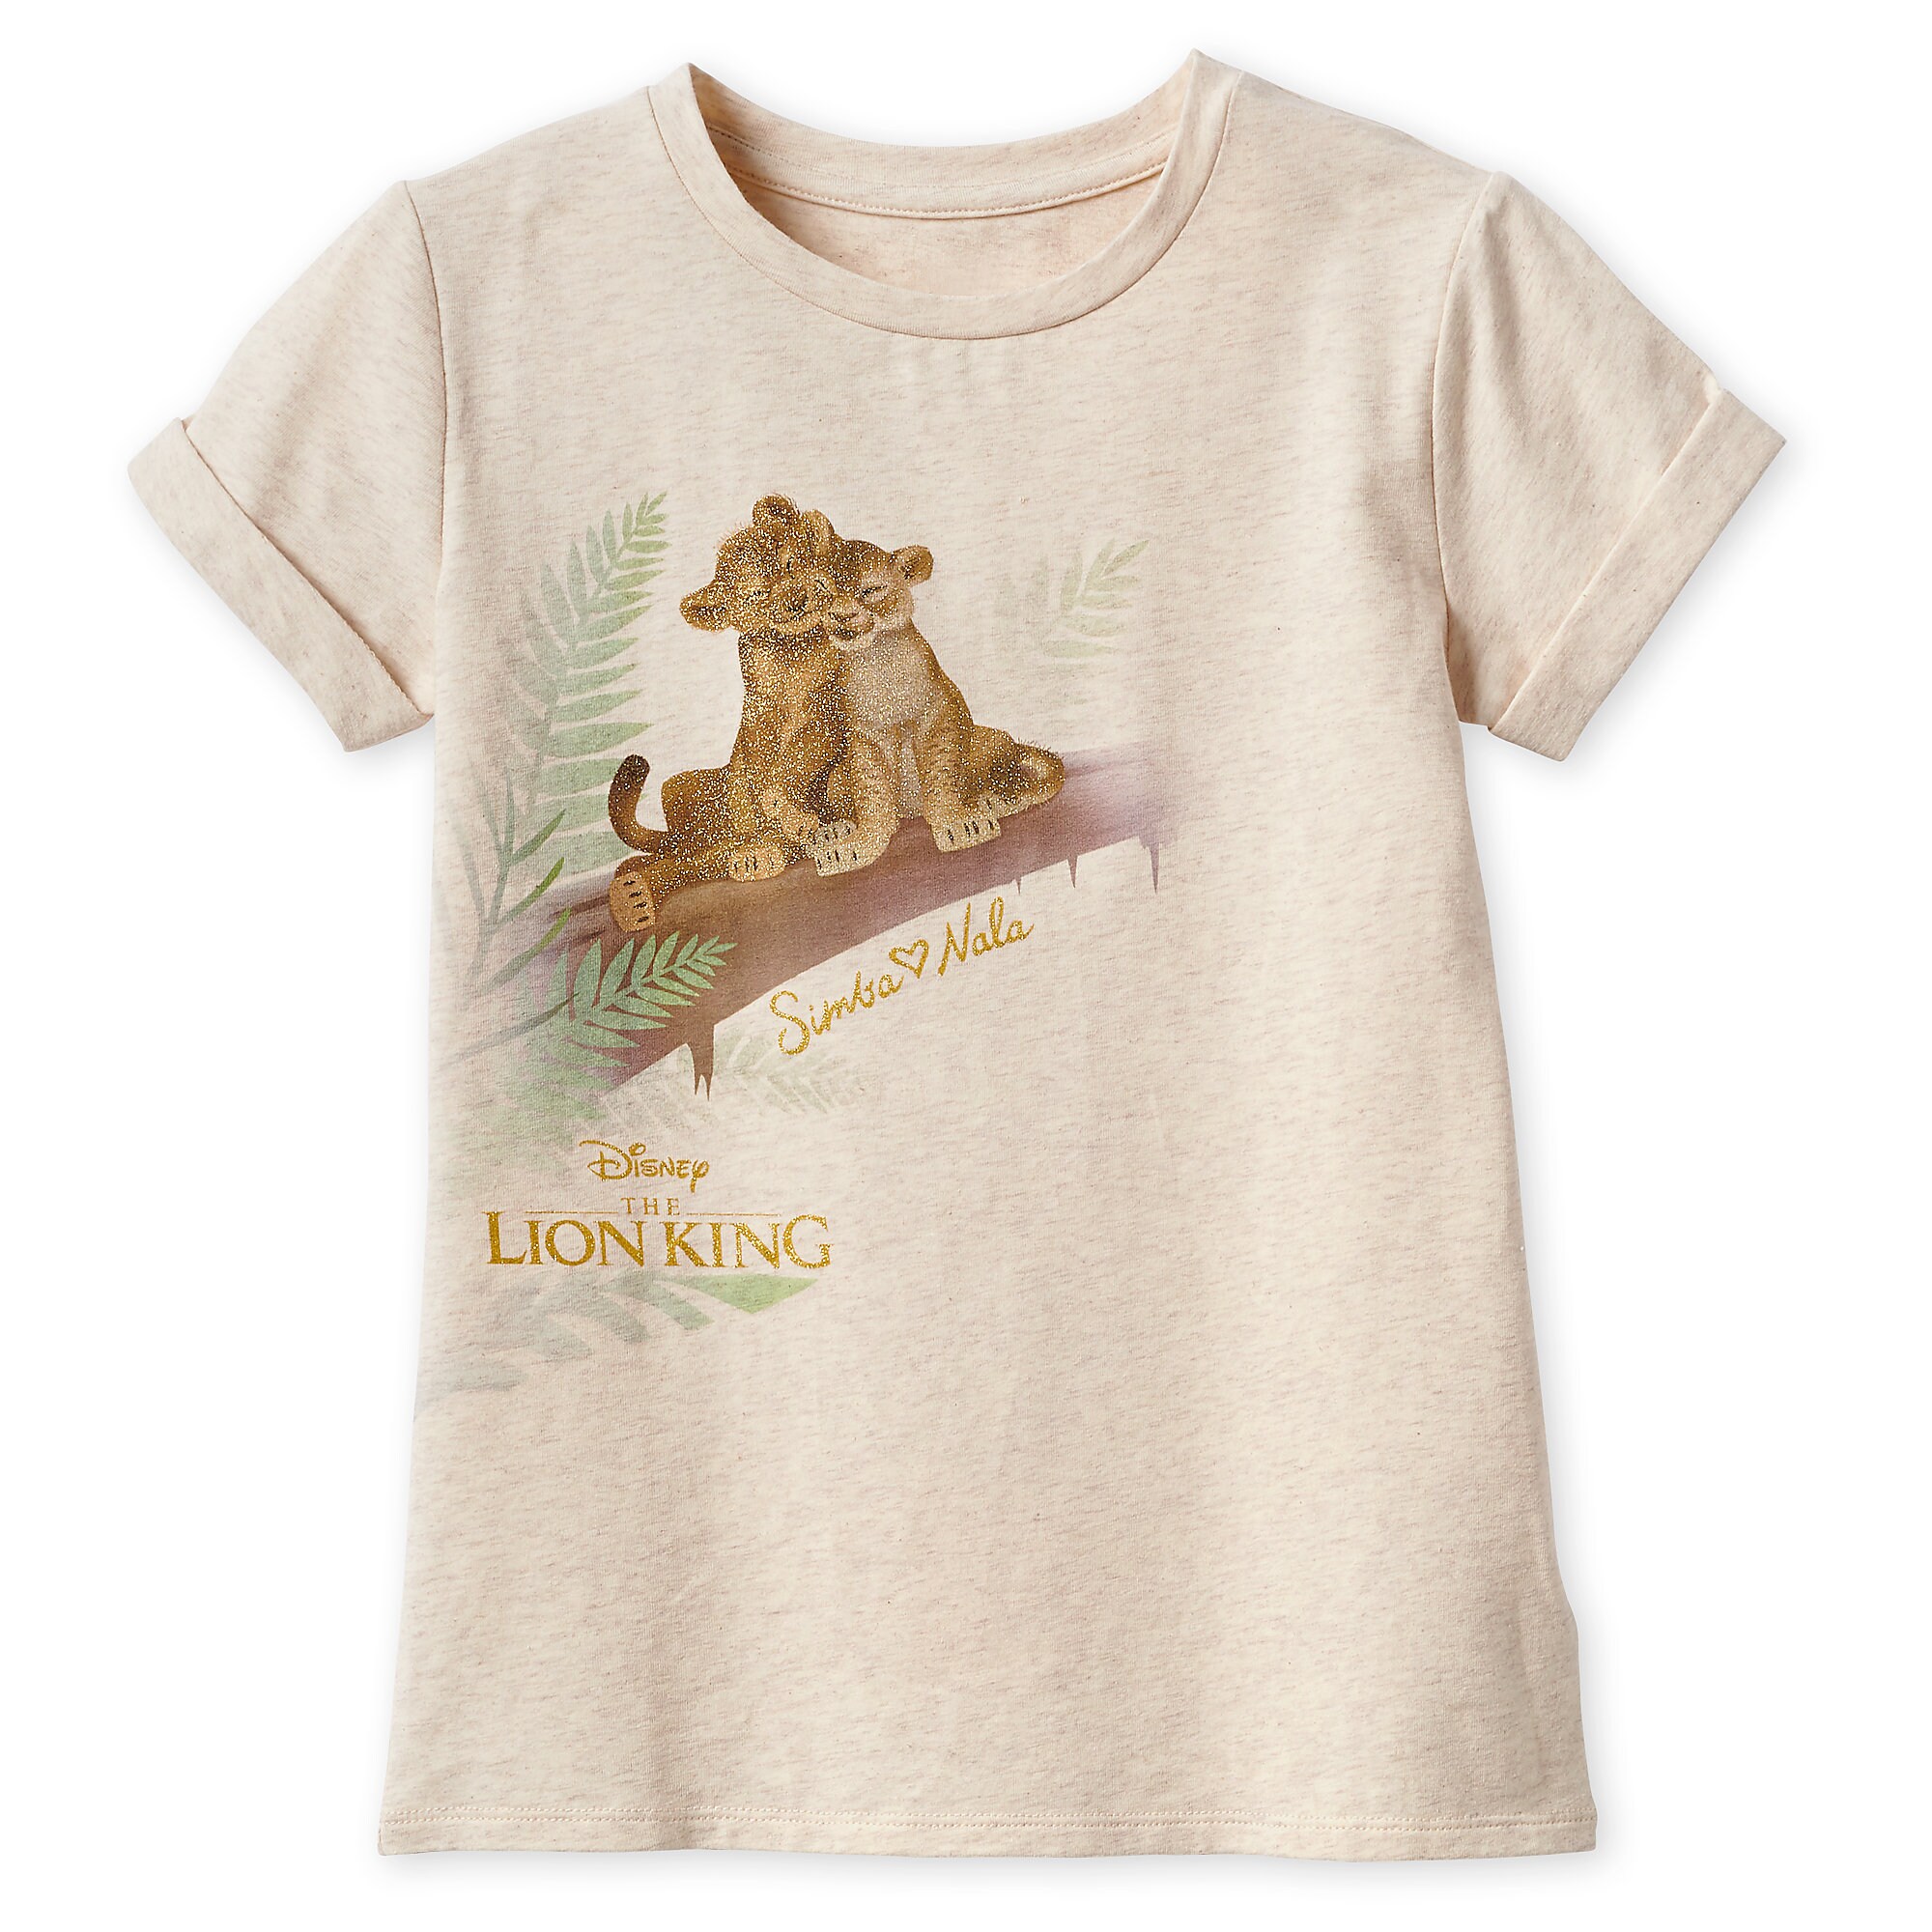 The Lion King Fashion T-Shirt for Girls - 2019 Film